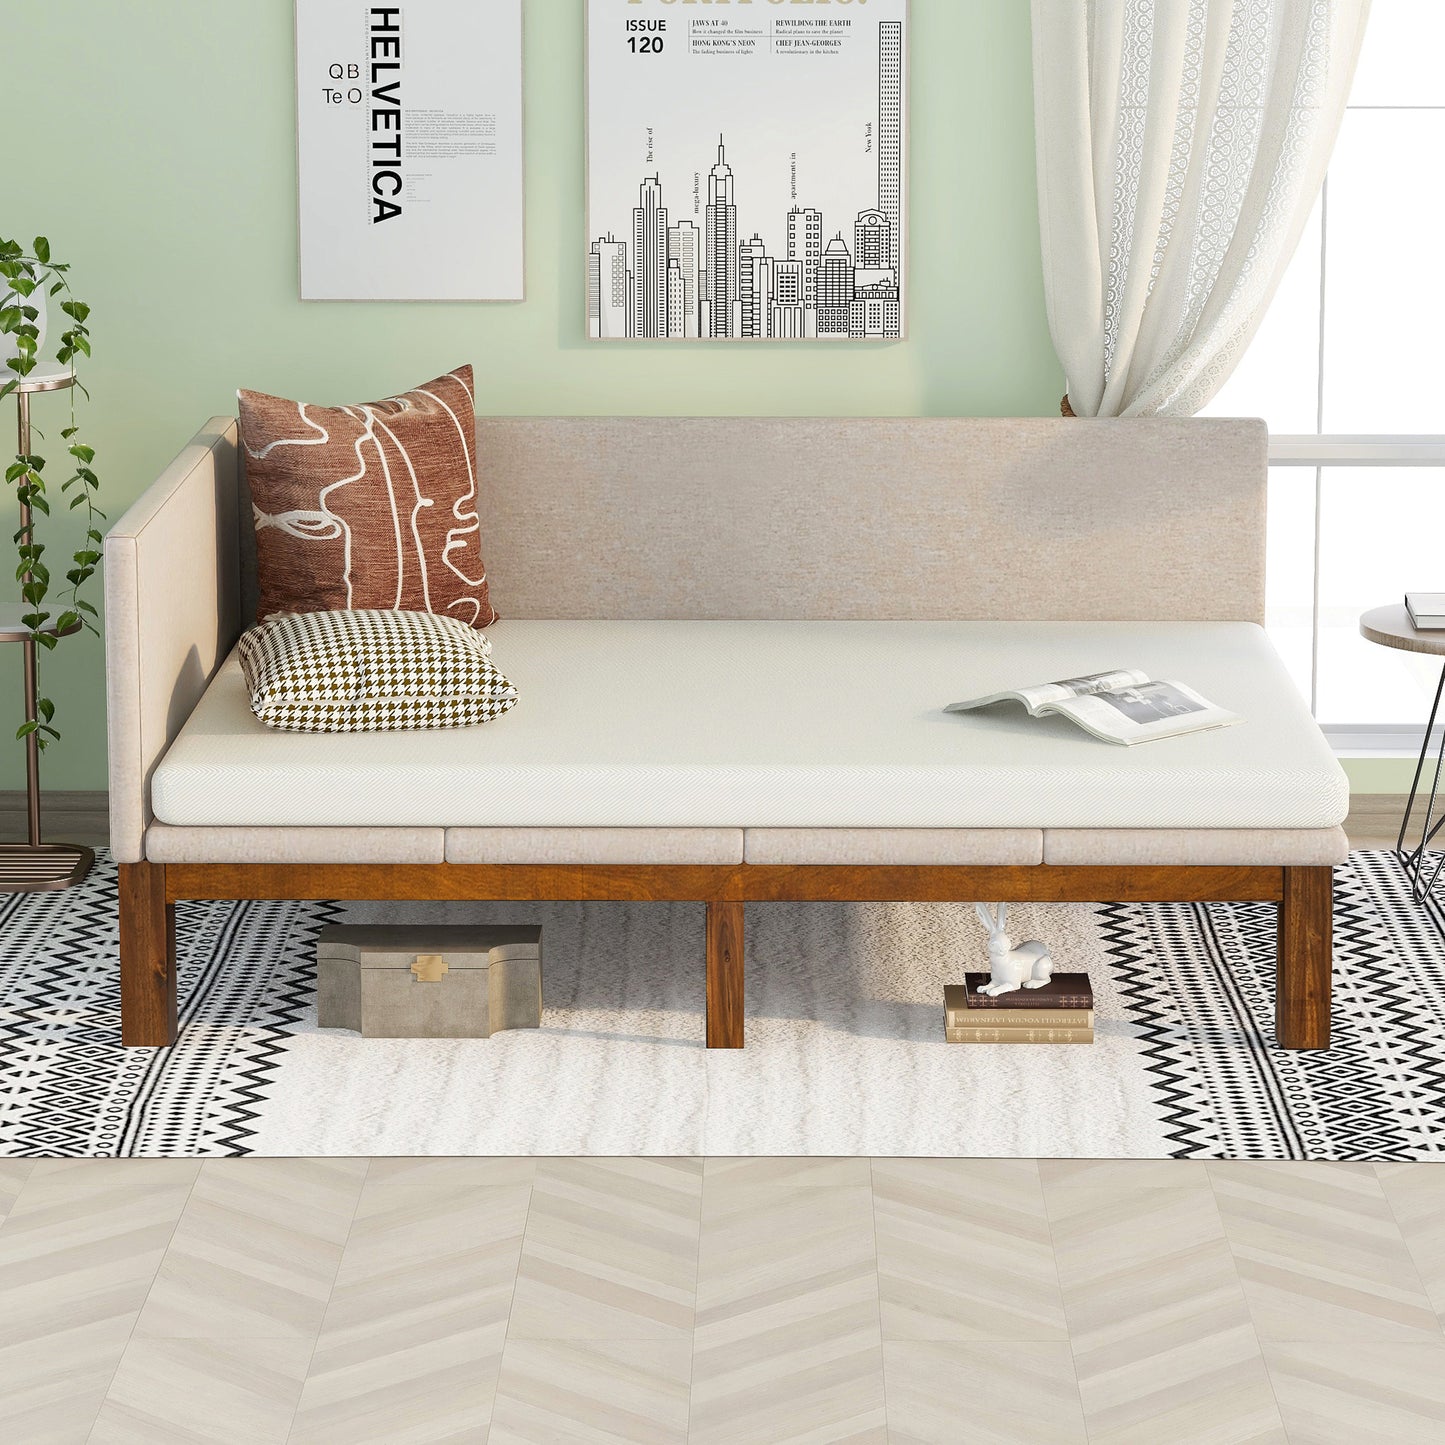 Upholstered Daybed/Sofa Bed Frame Full Size Linen-Beige